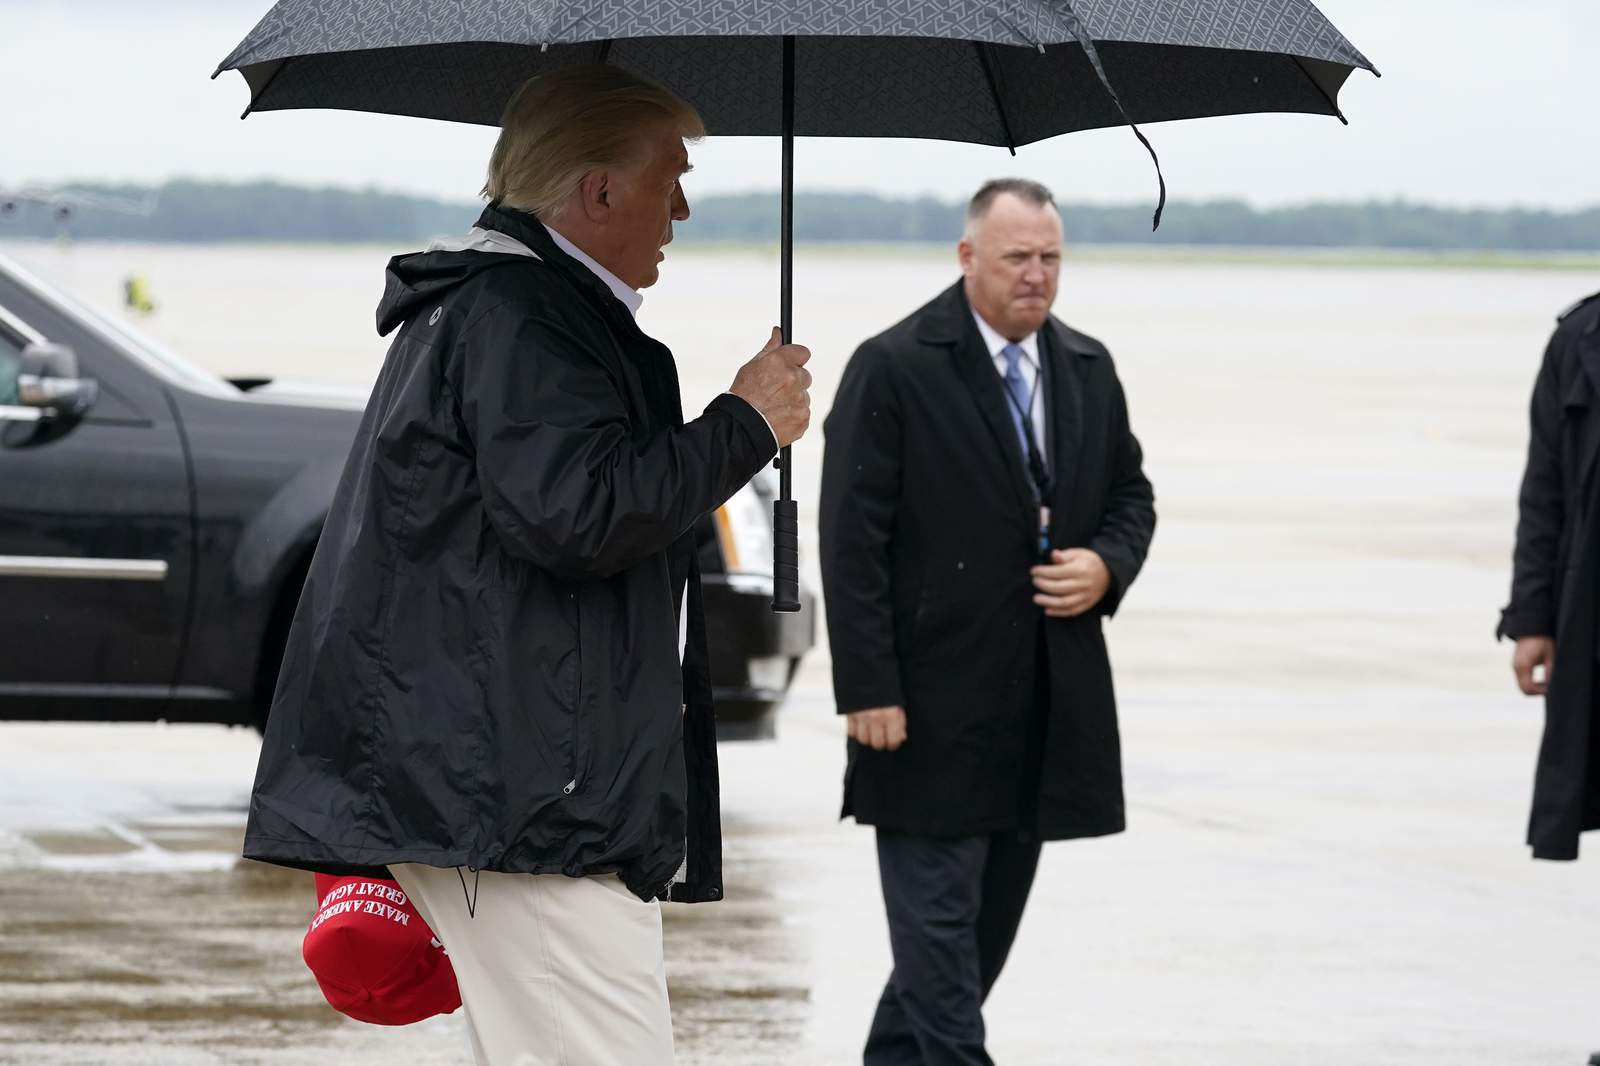 President Trump traveling to survey damage in hurricane-hit states